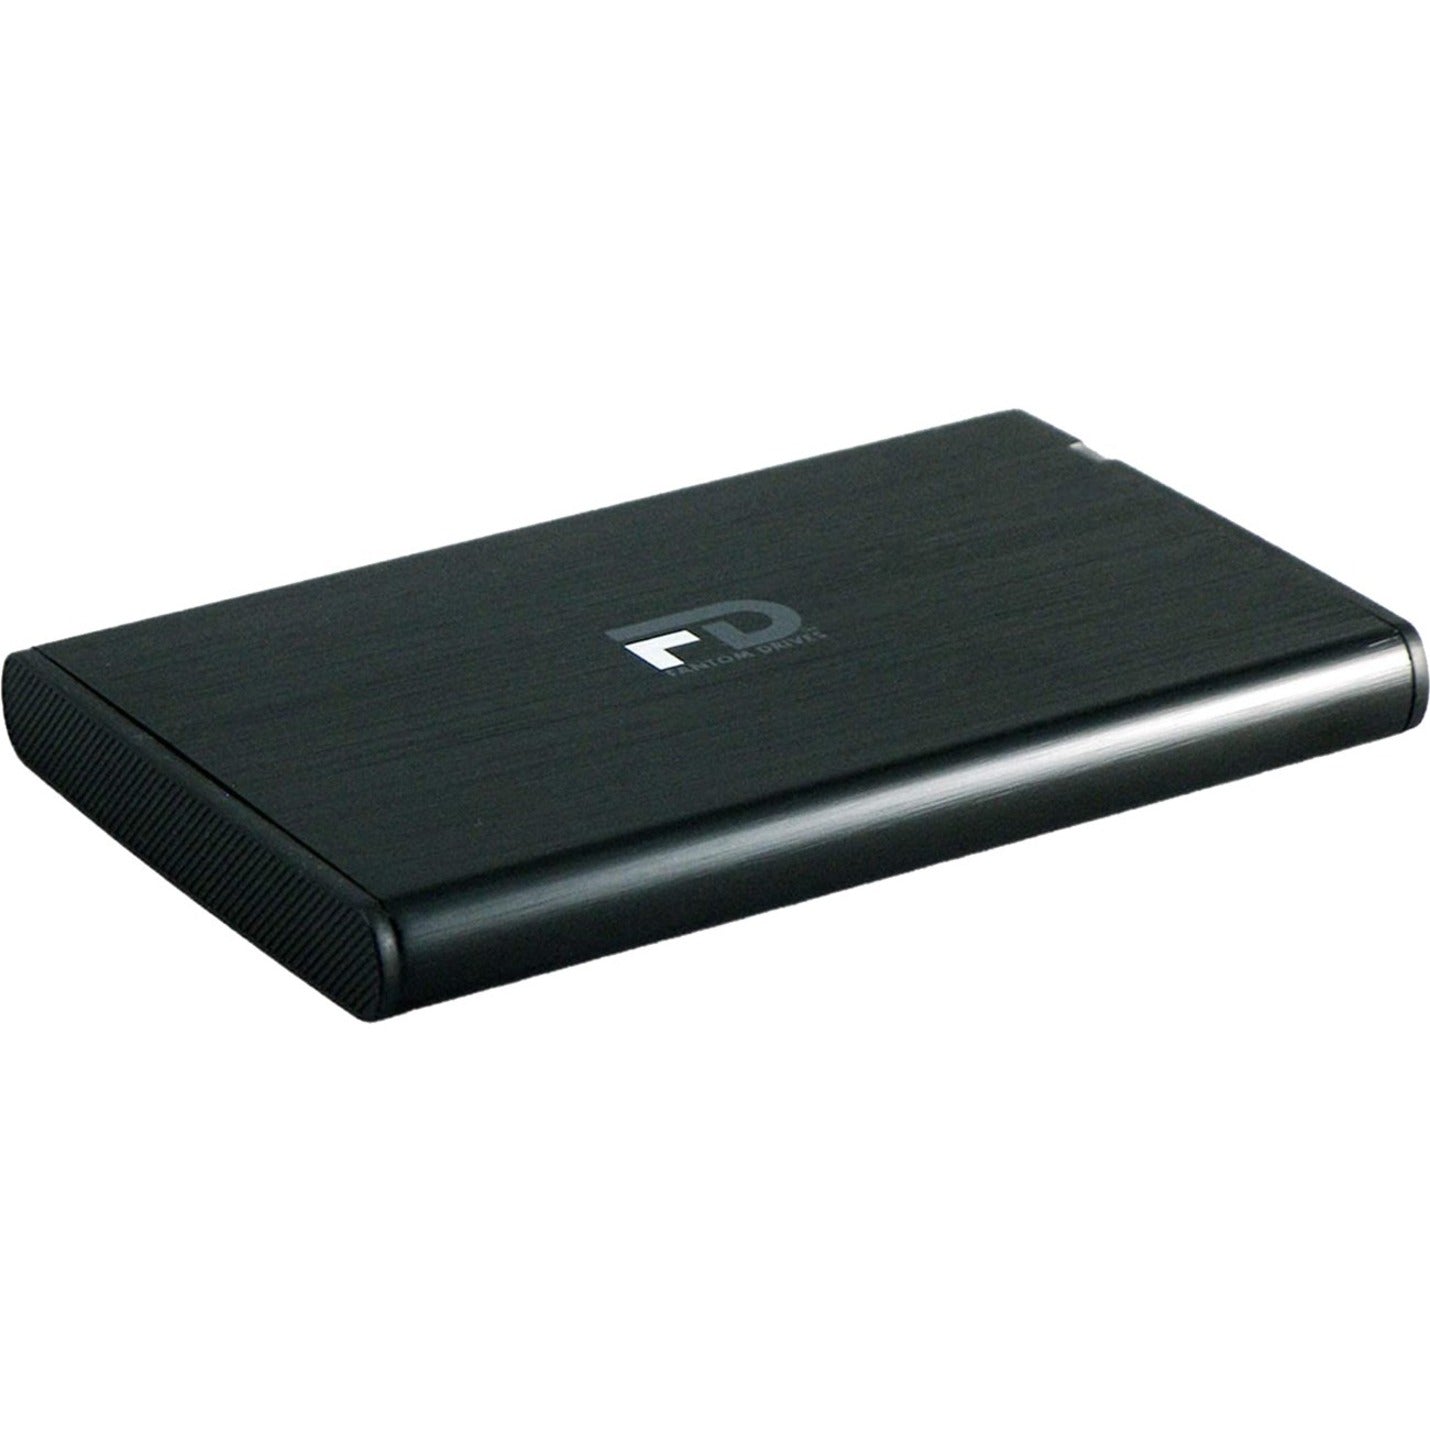 Fantom Drives 5TB Portable Hard Drive - GFORCE 3 Mini - USB 3 Aluminum Black GF3BM5000U